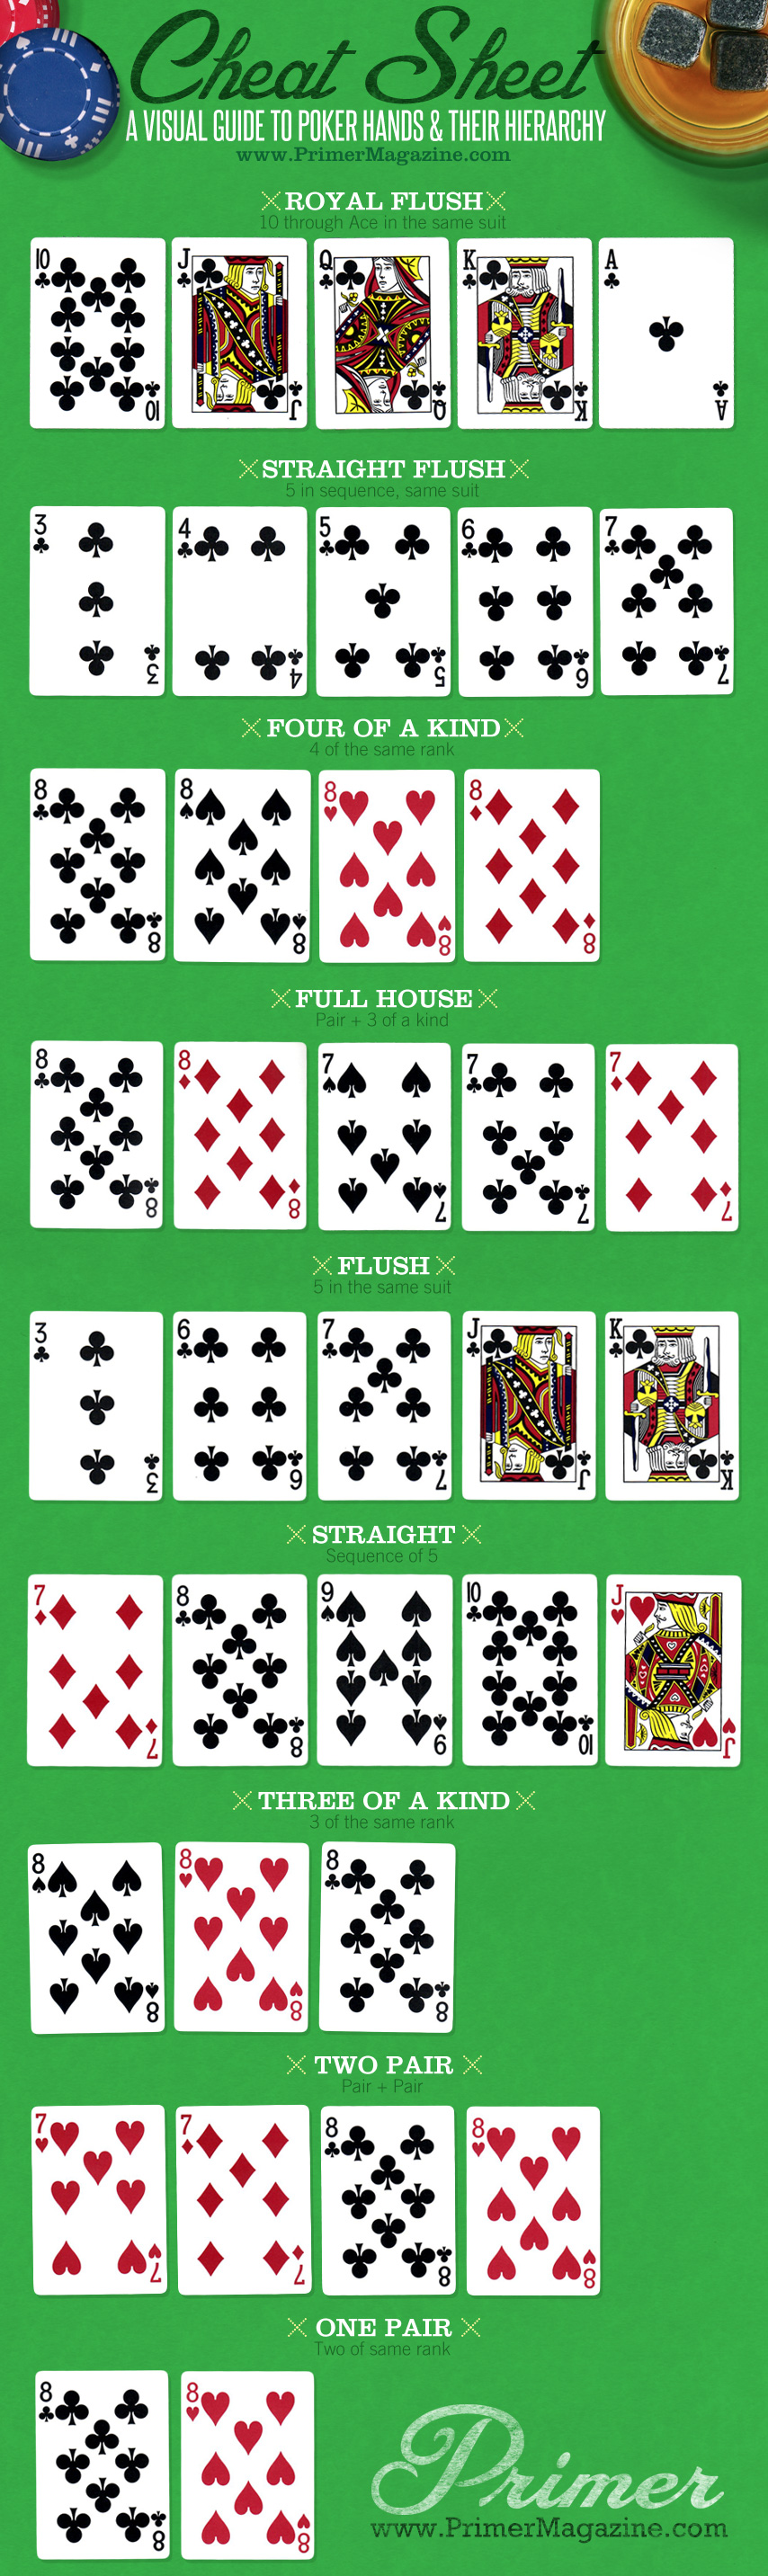 Poker hand descriptions infographic